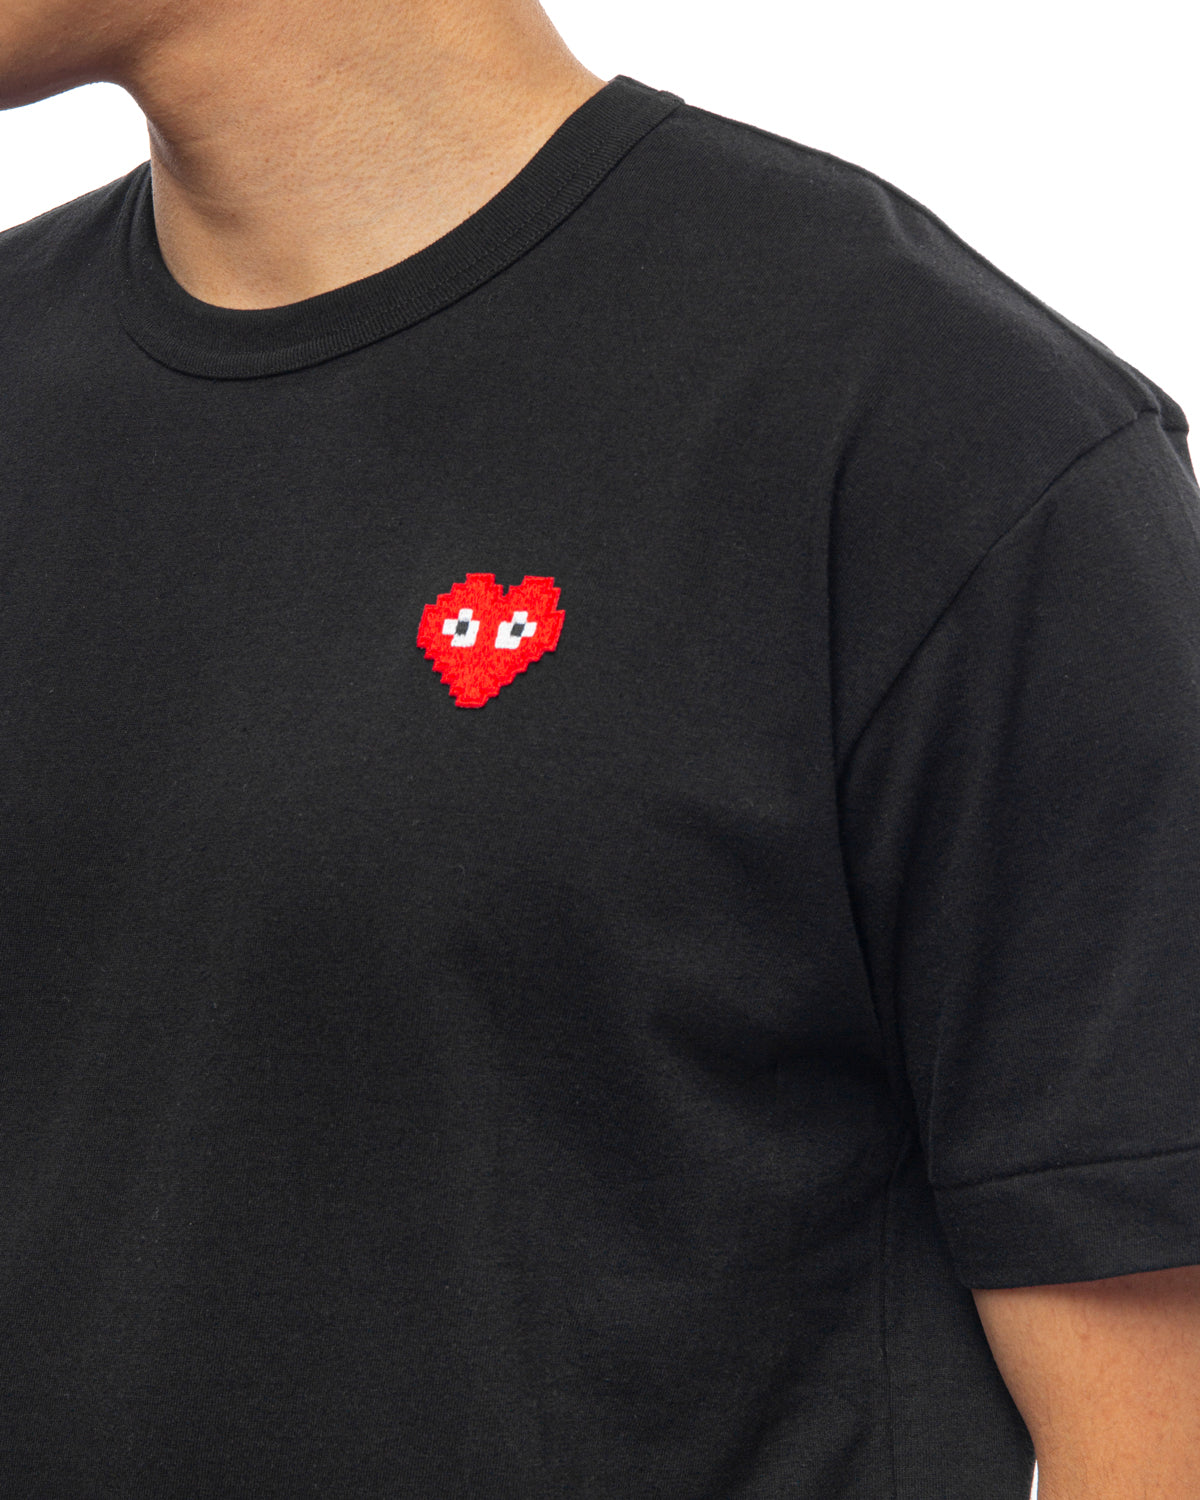 PLAY Invader Pixel Heart T-shirt Black